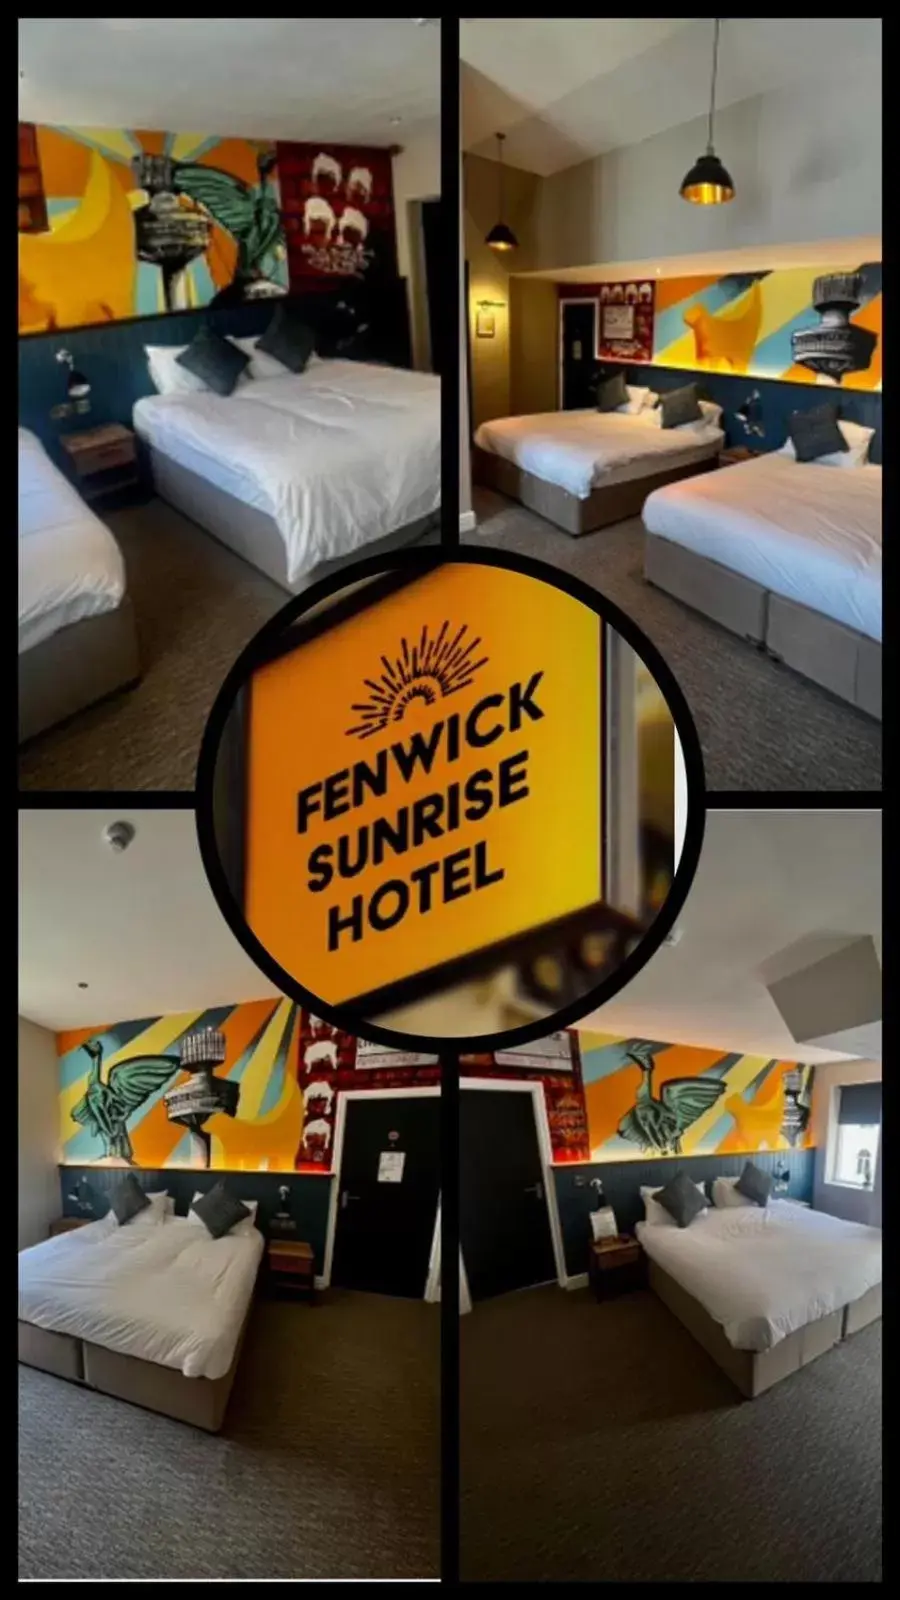 Property logo or sign in Fenwick Sunrise Hotel